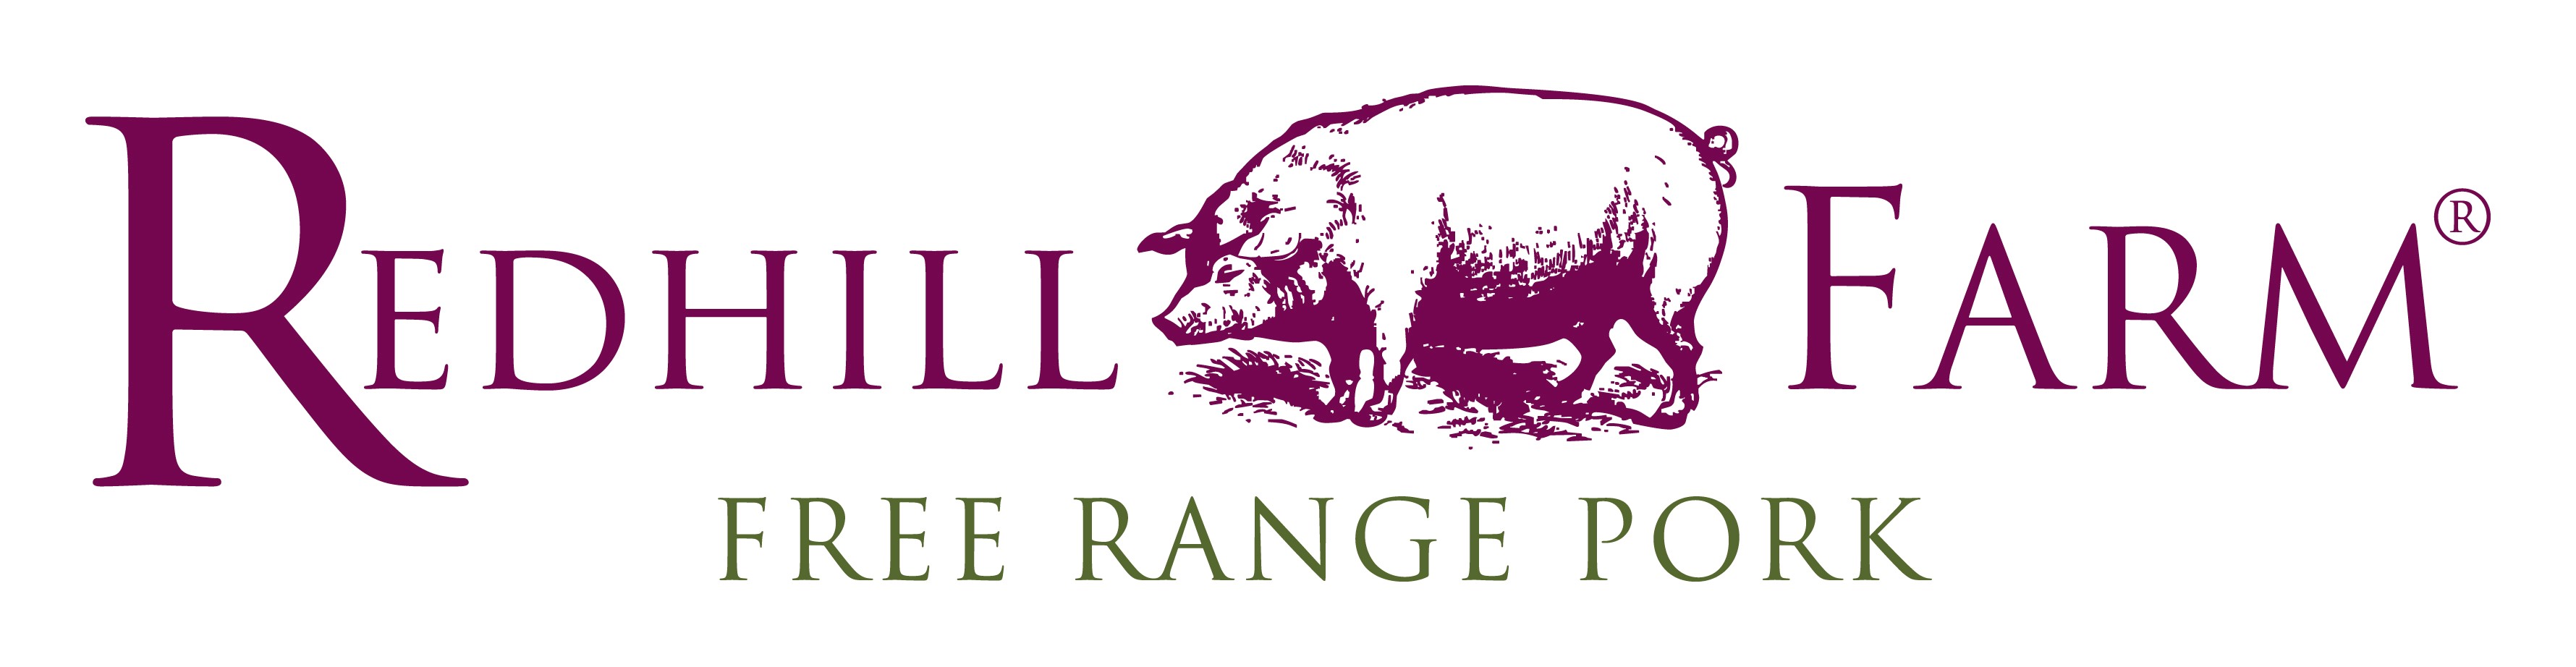 Redhill Farm Free Range Pork